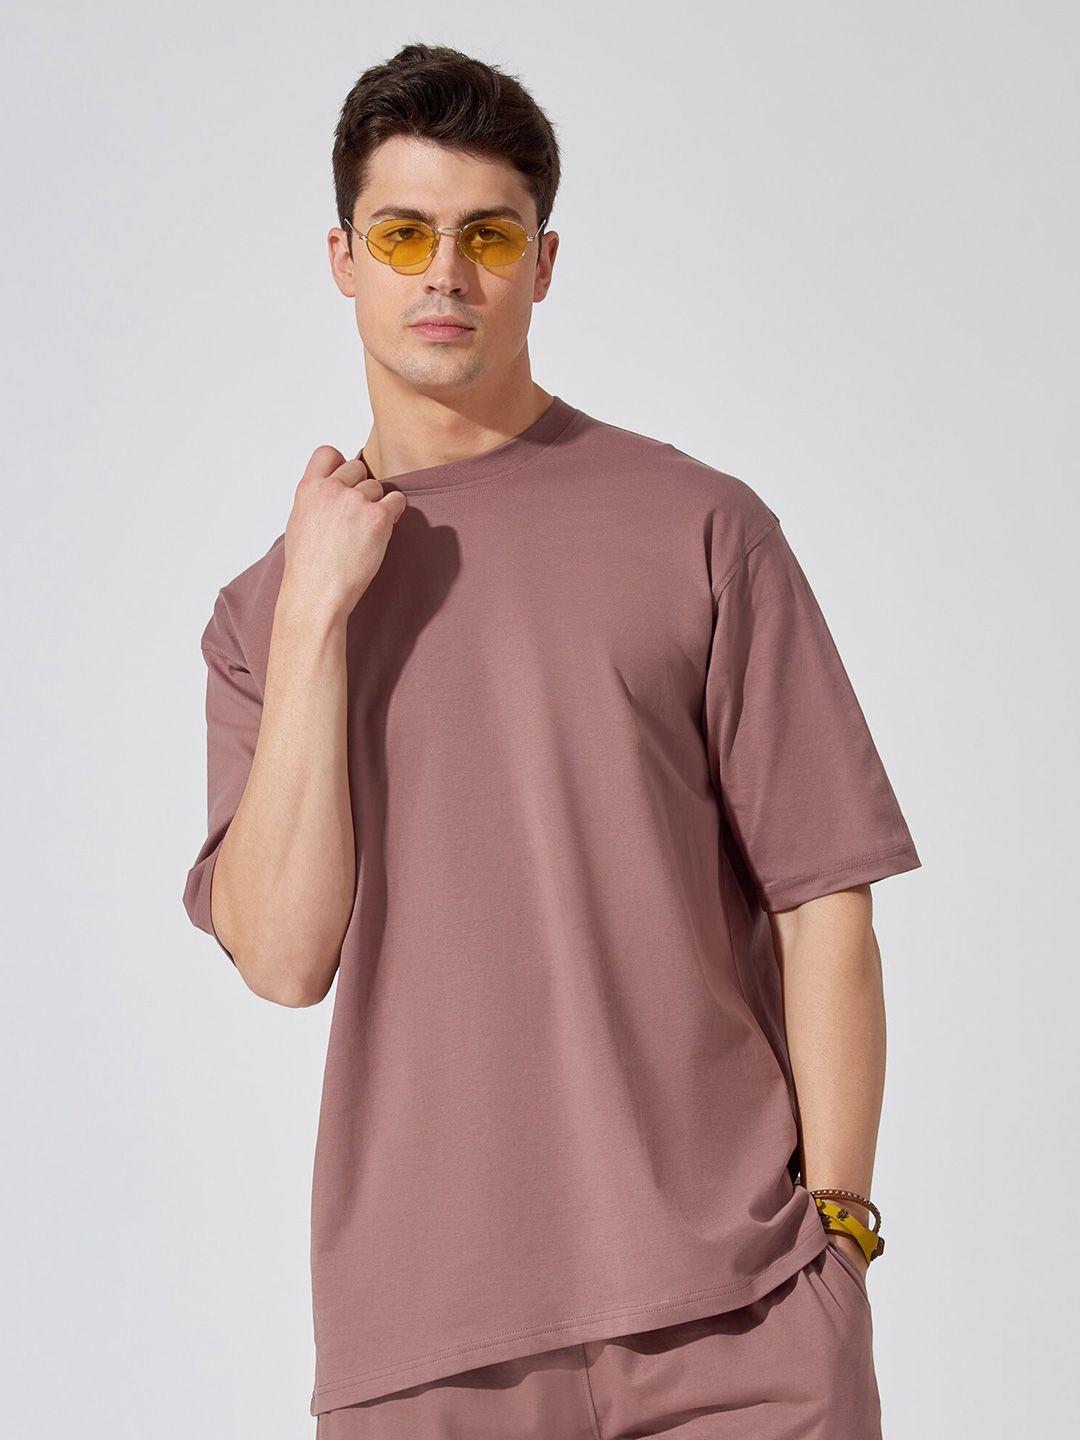 maniac-men-drop-shoulder-sleeve-cotton-oversize-fitted-t-shirt